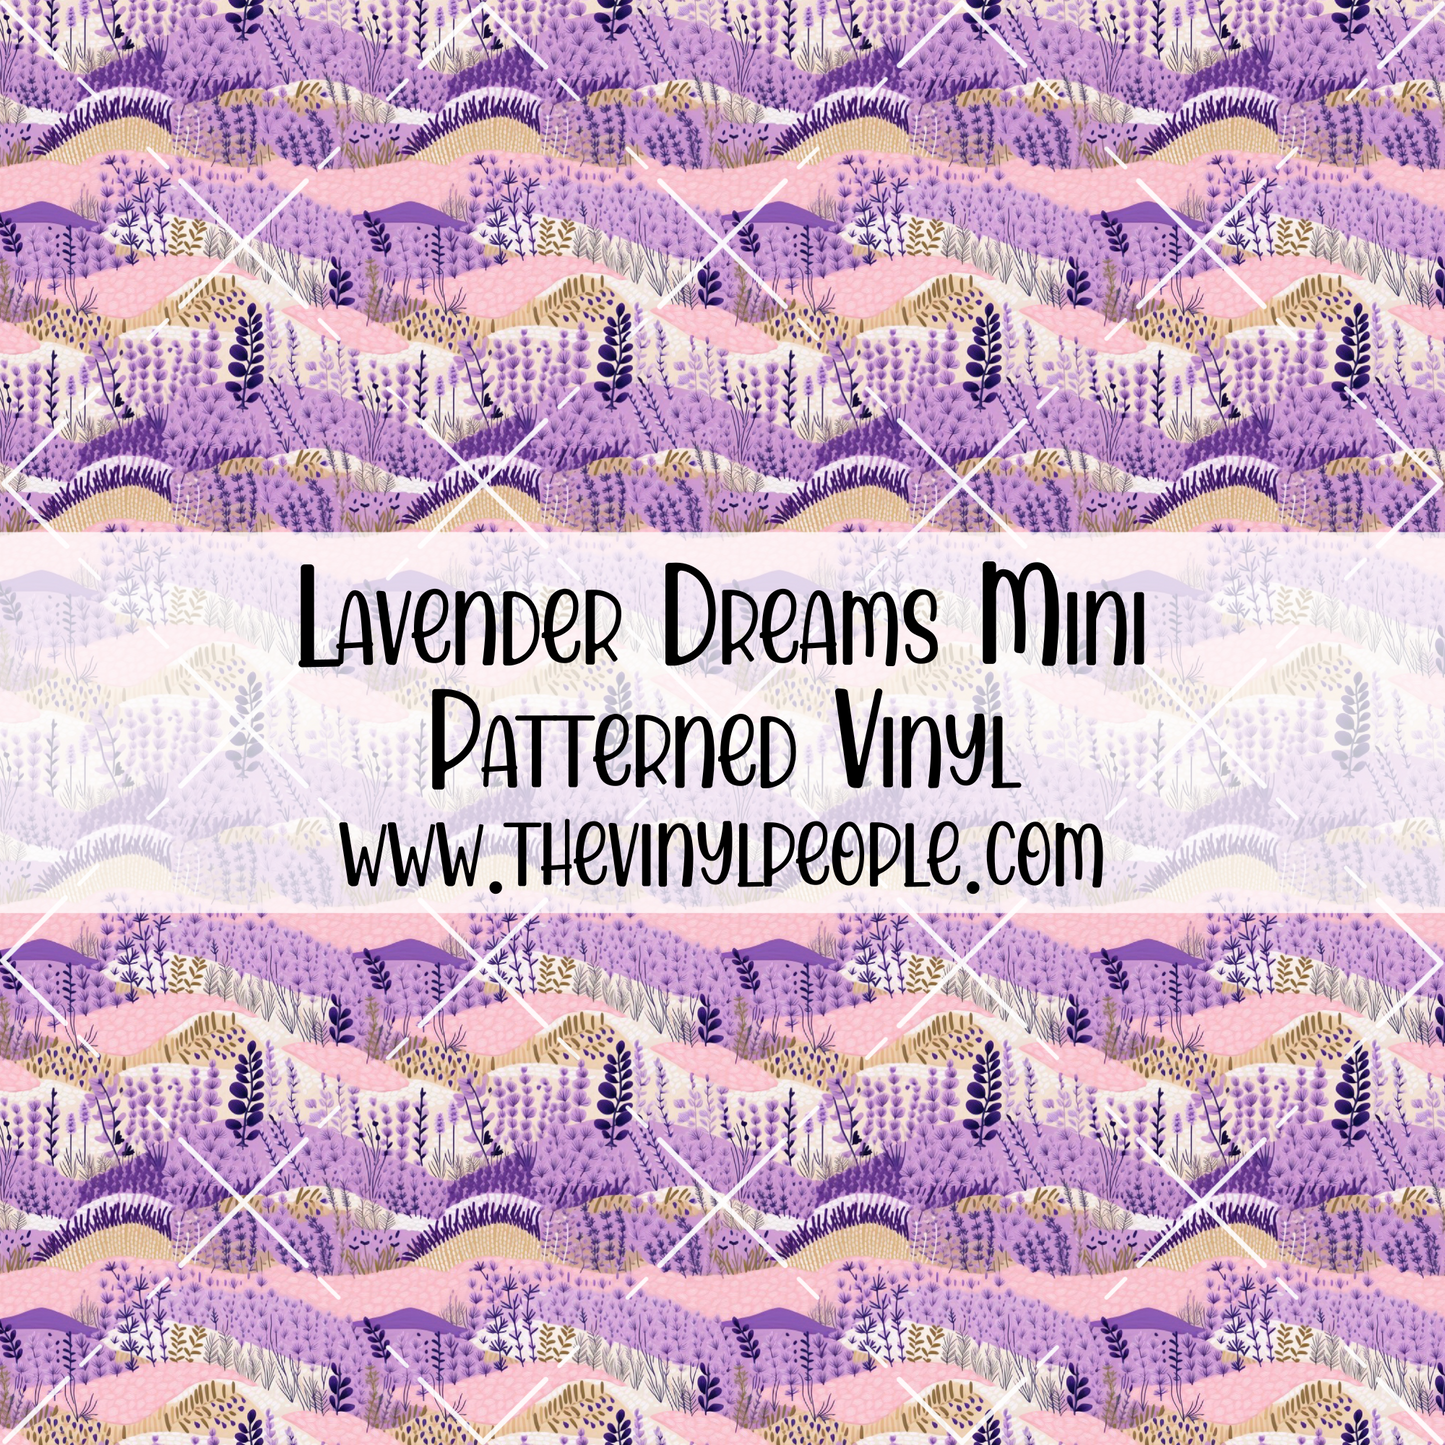 Lavender Dreams Patterned Vinyl